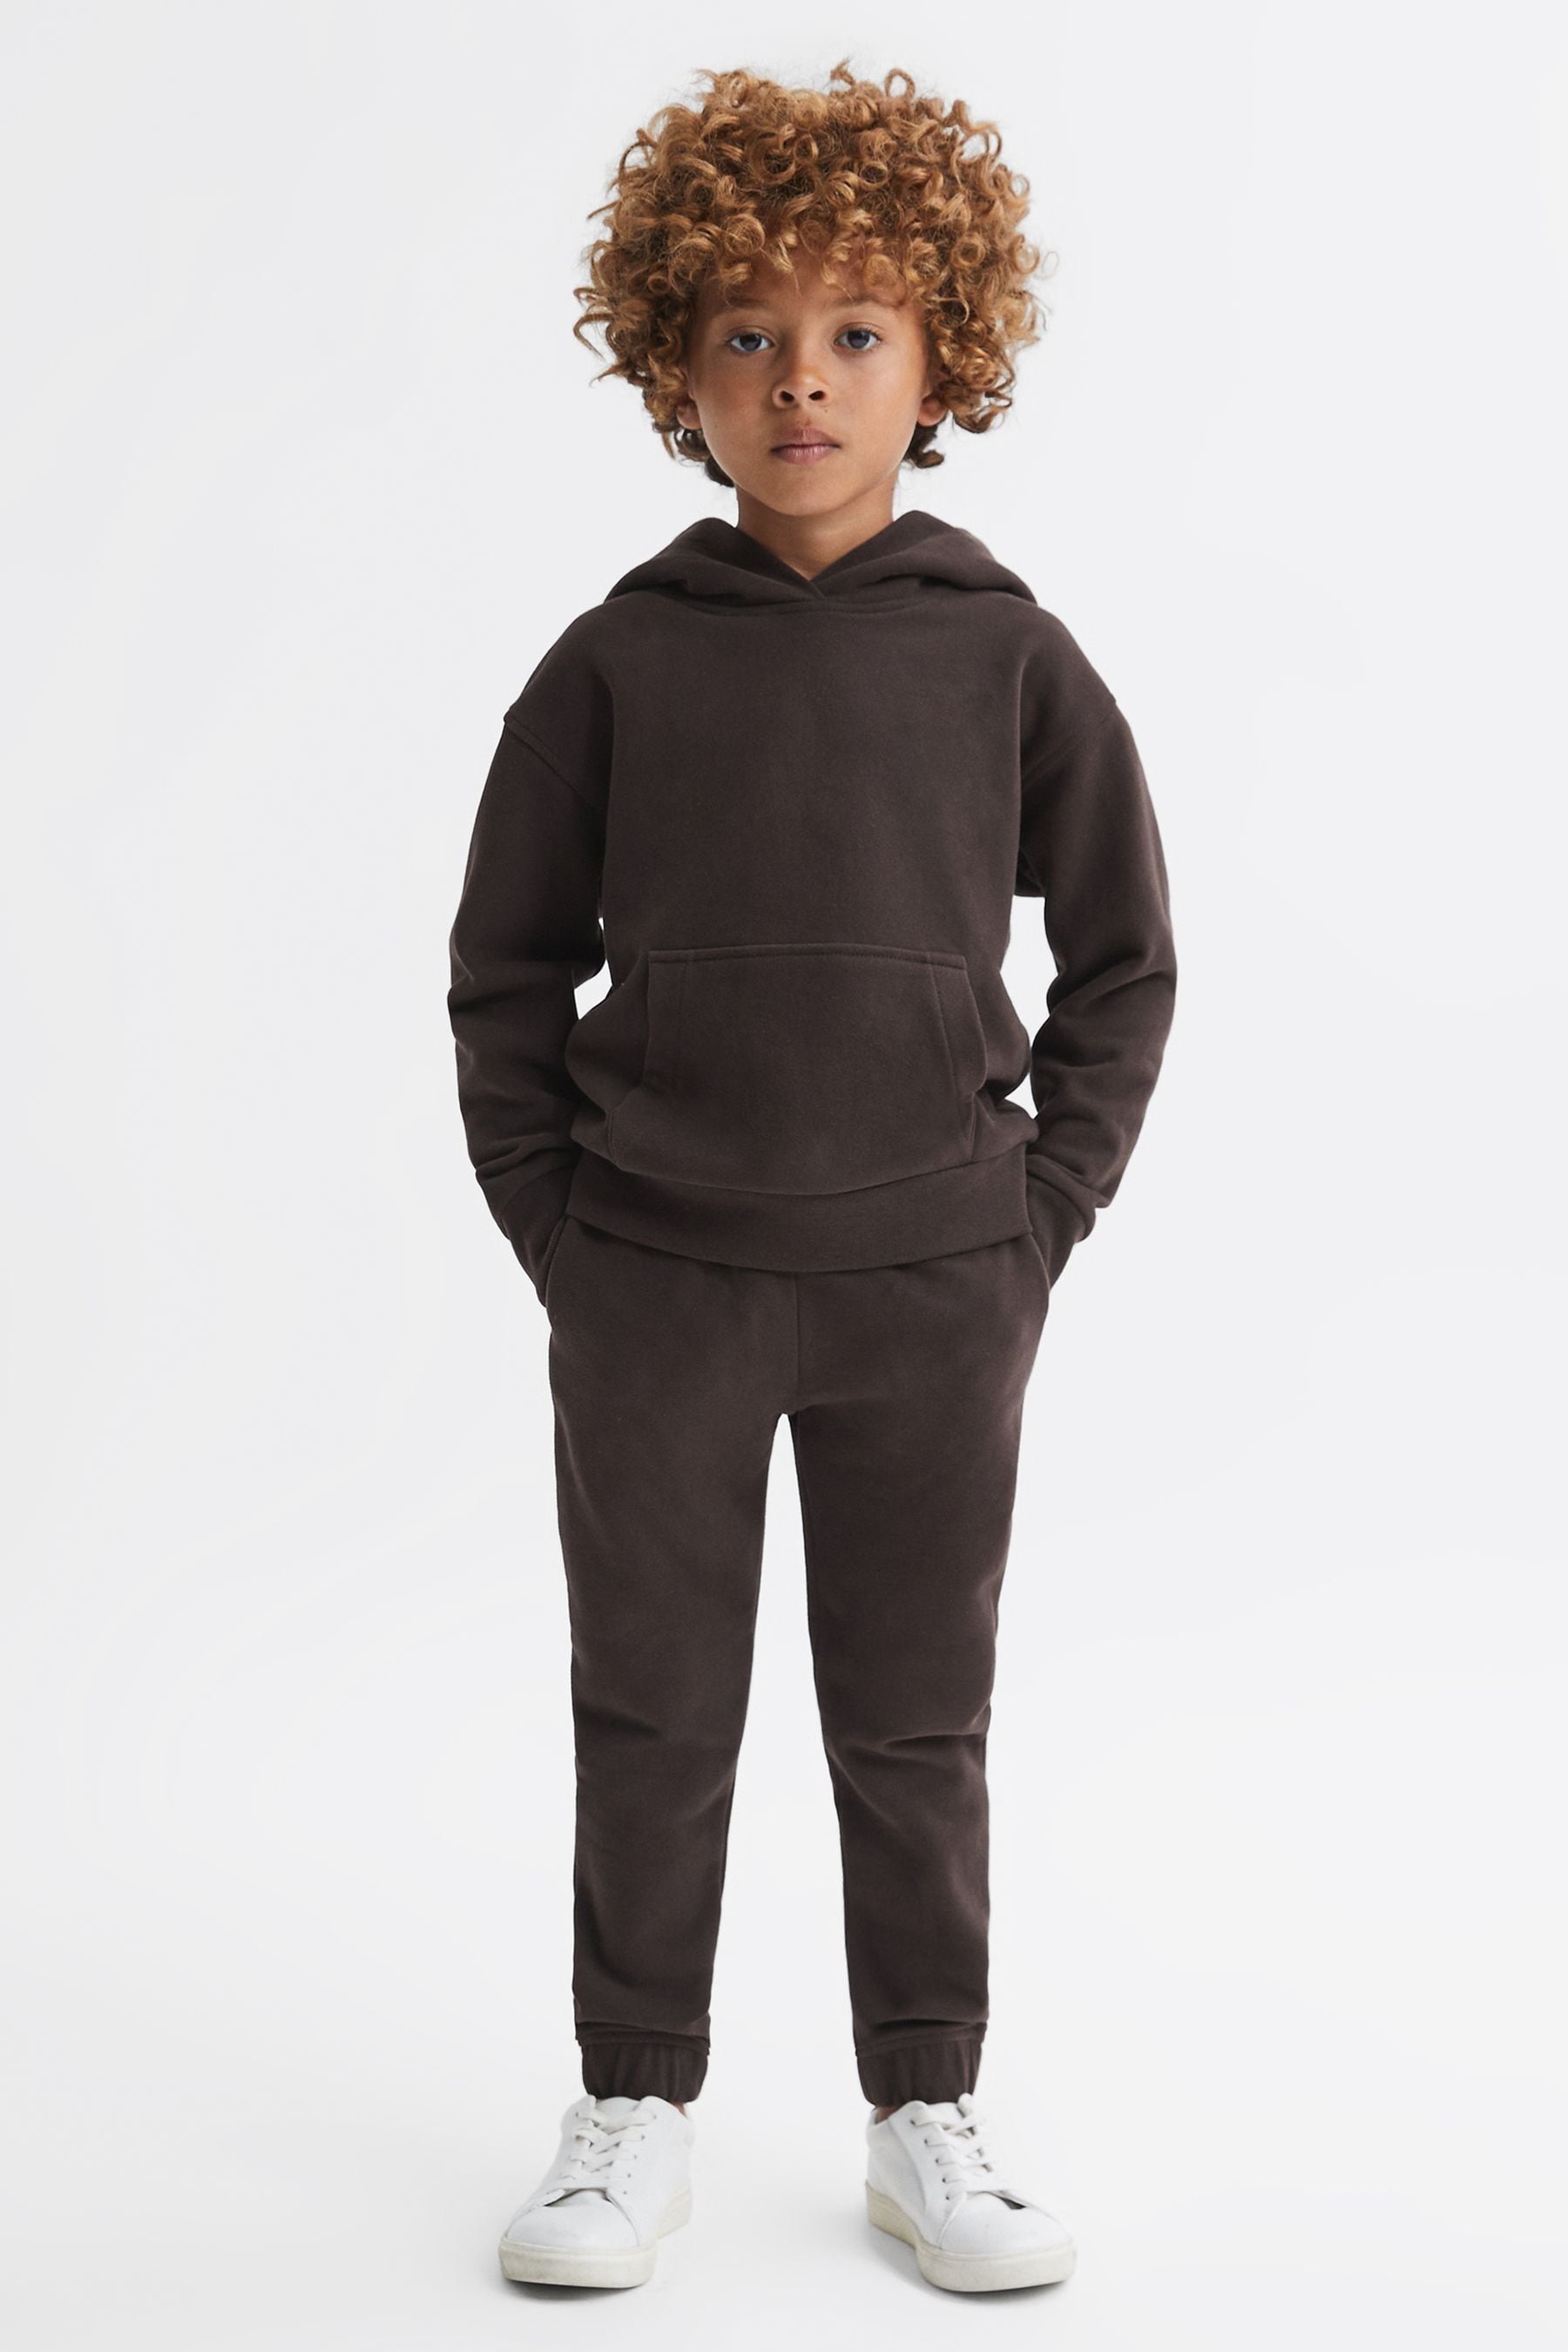 Reiss Kids' Alexander - Chocolate Junior Oversized Cotton Jersey Hoodie, Age 5-6 Years